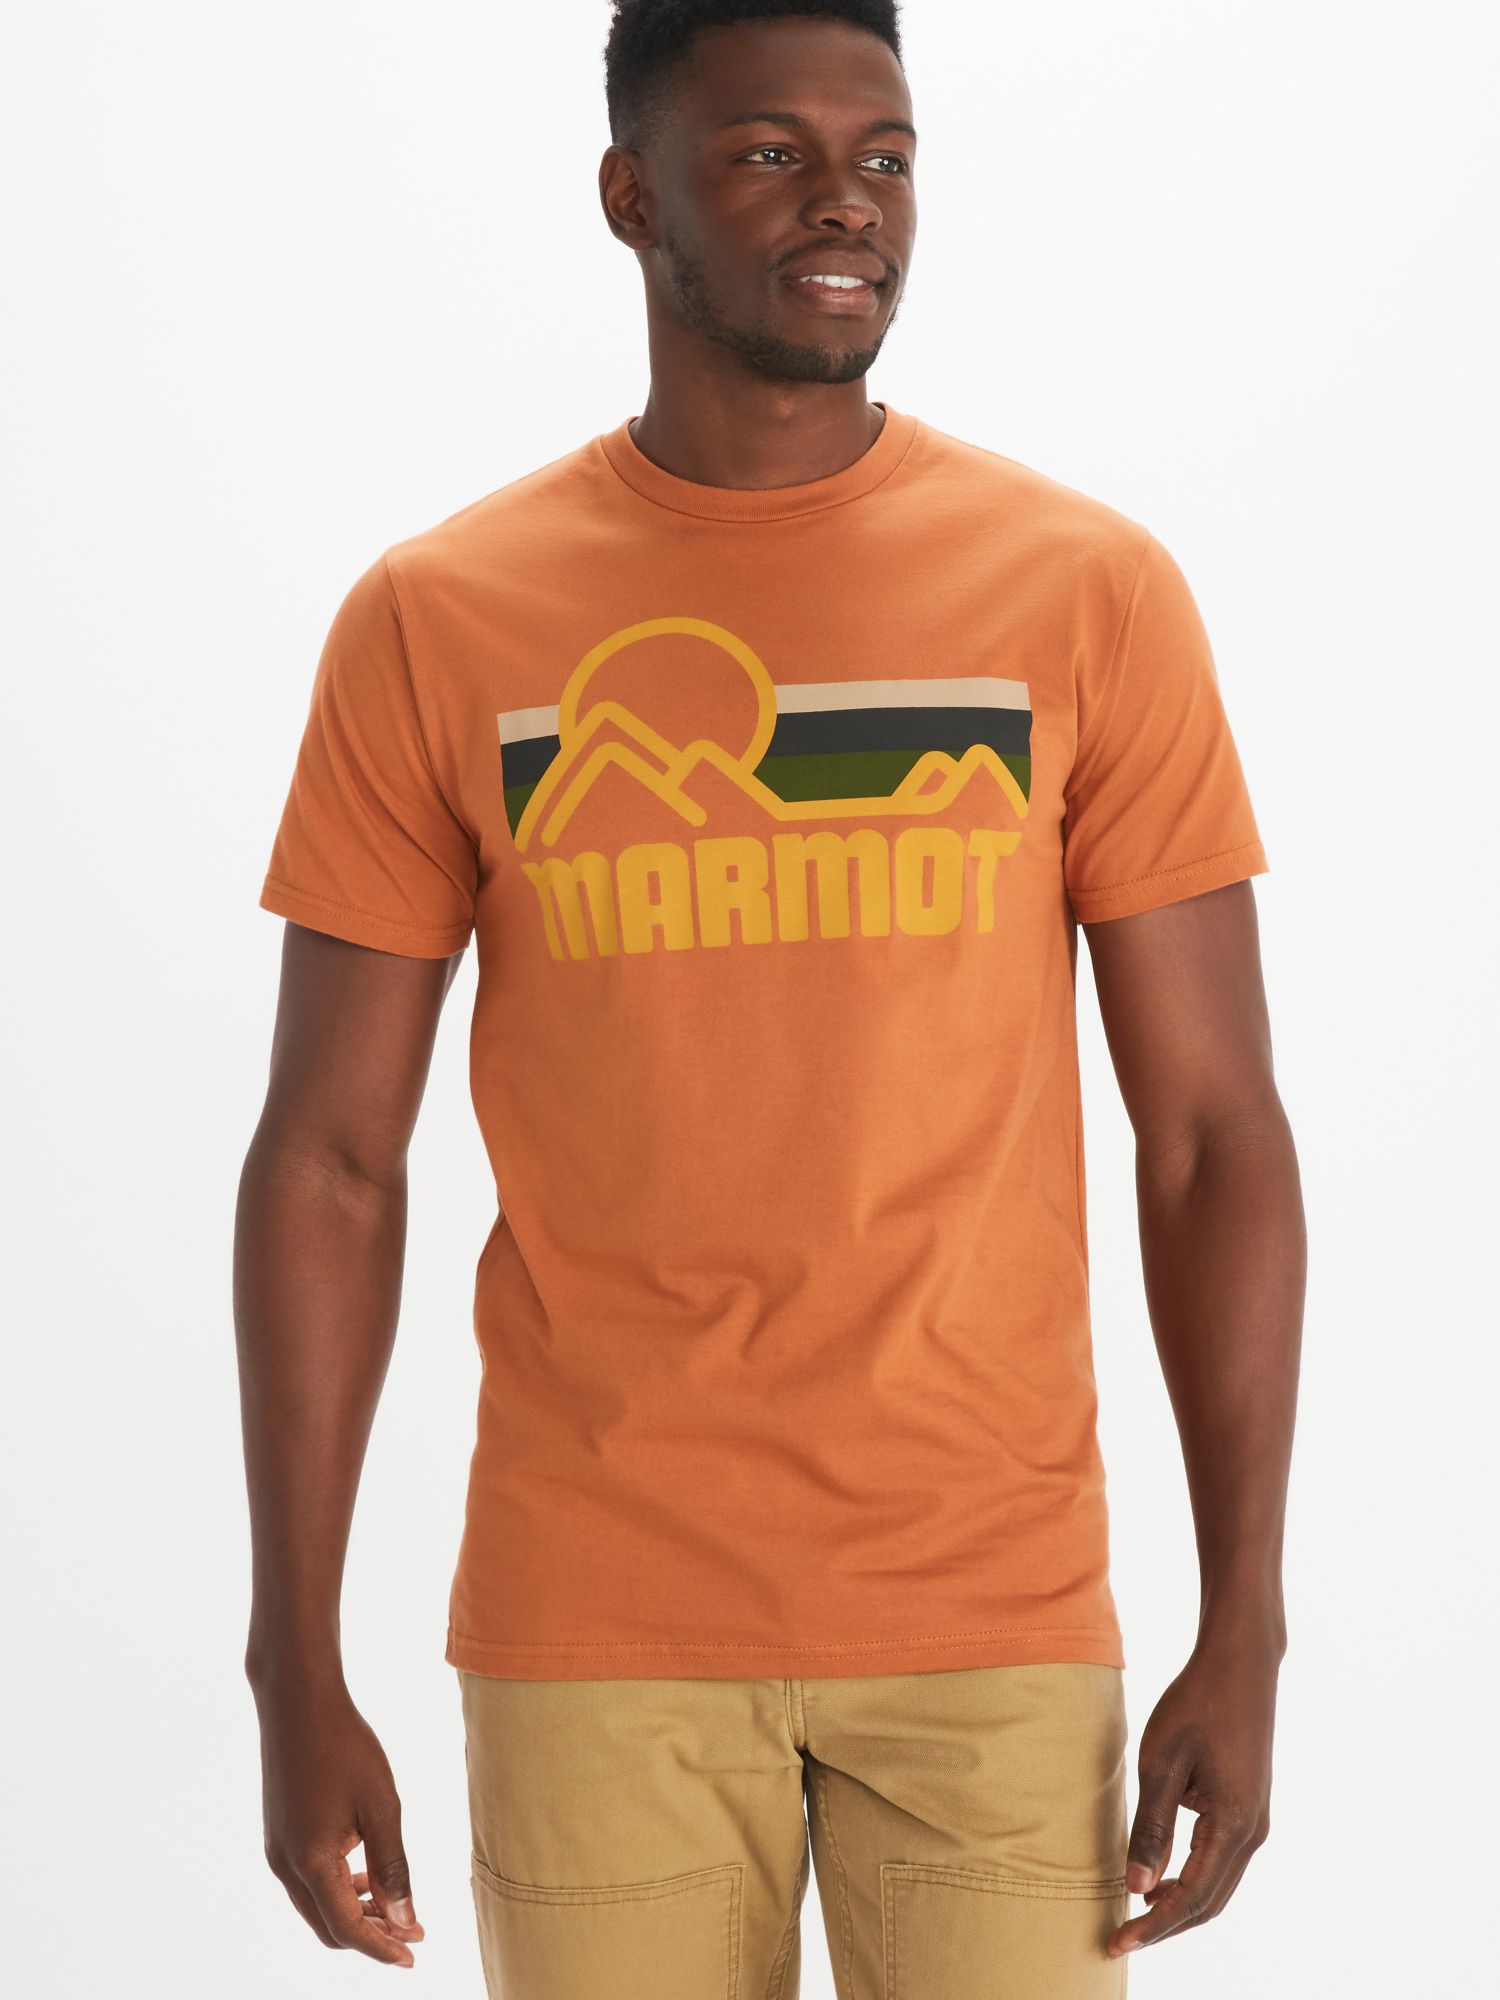 para Deportes al Aire Libre Transpirable Hombre Secado rápido Marmot Coastal tee Short Sleeve Camisa de Manga Corta 